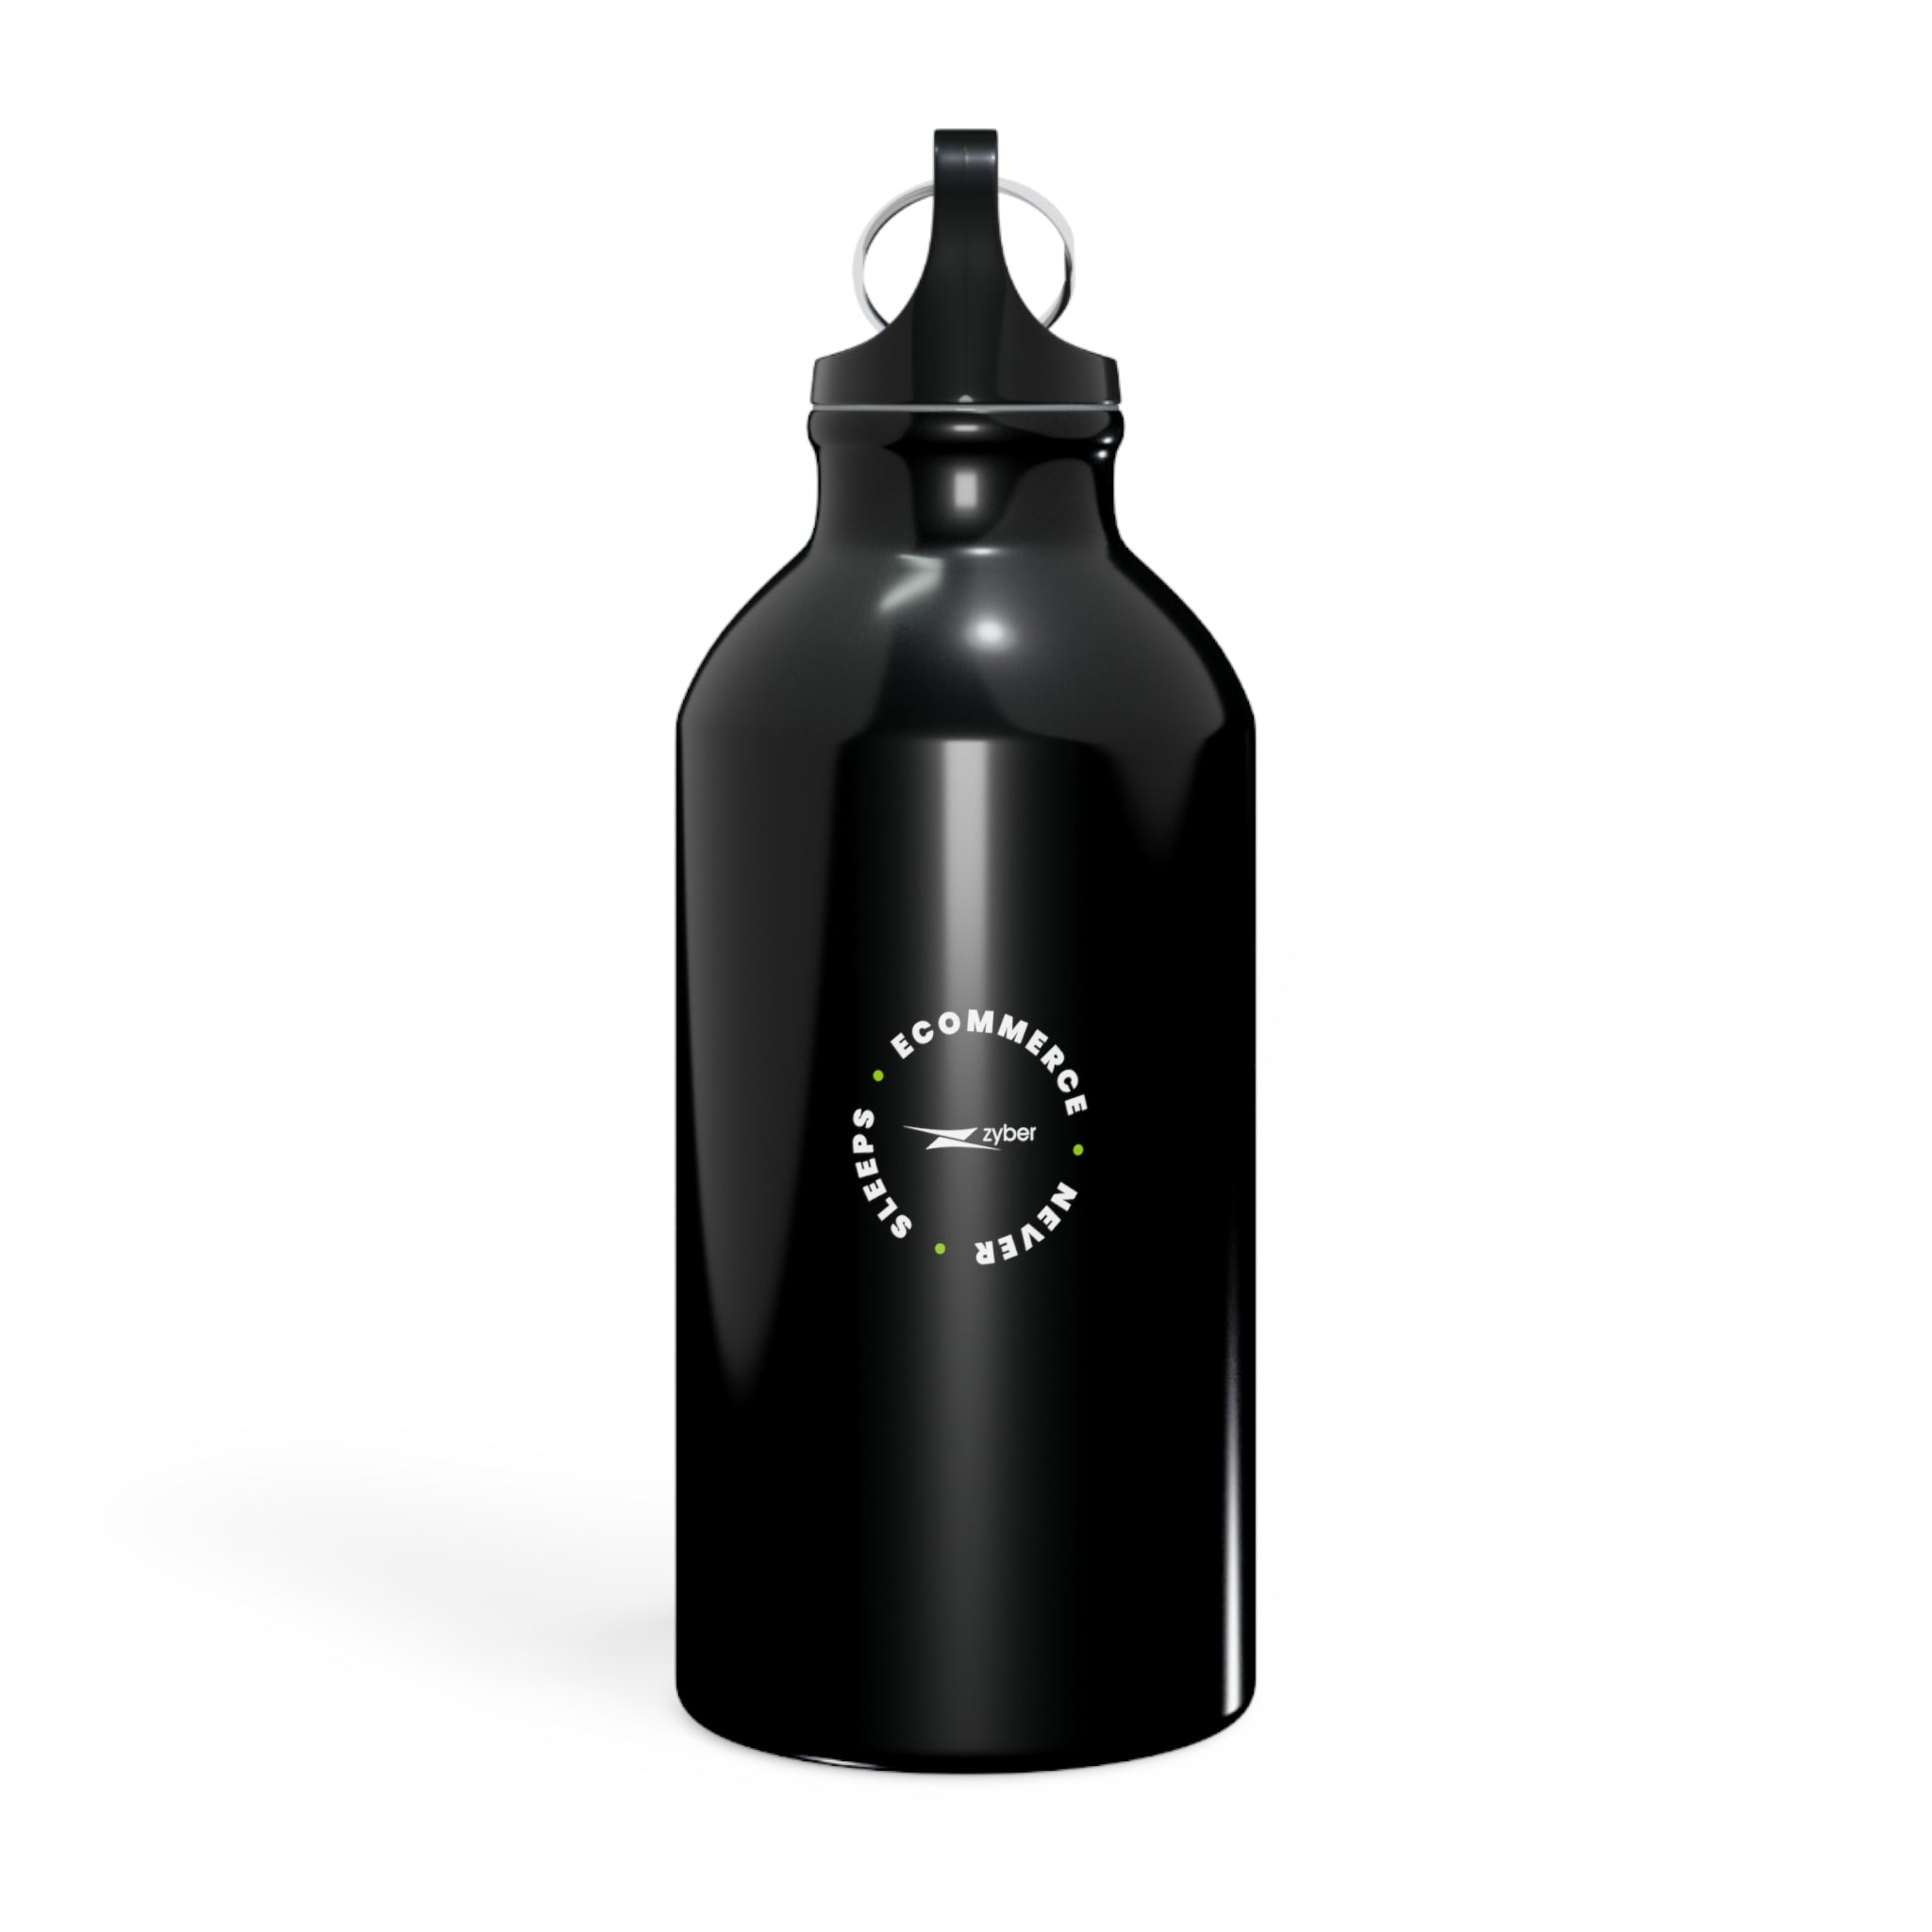 Zyber eCommerce never sleeps logo water bottle